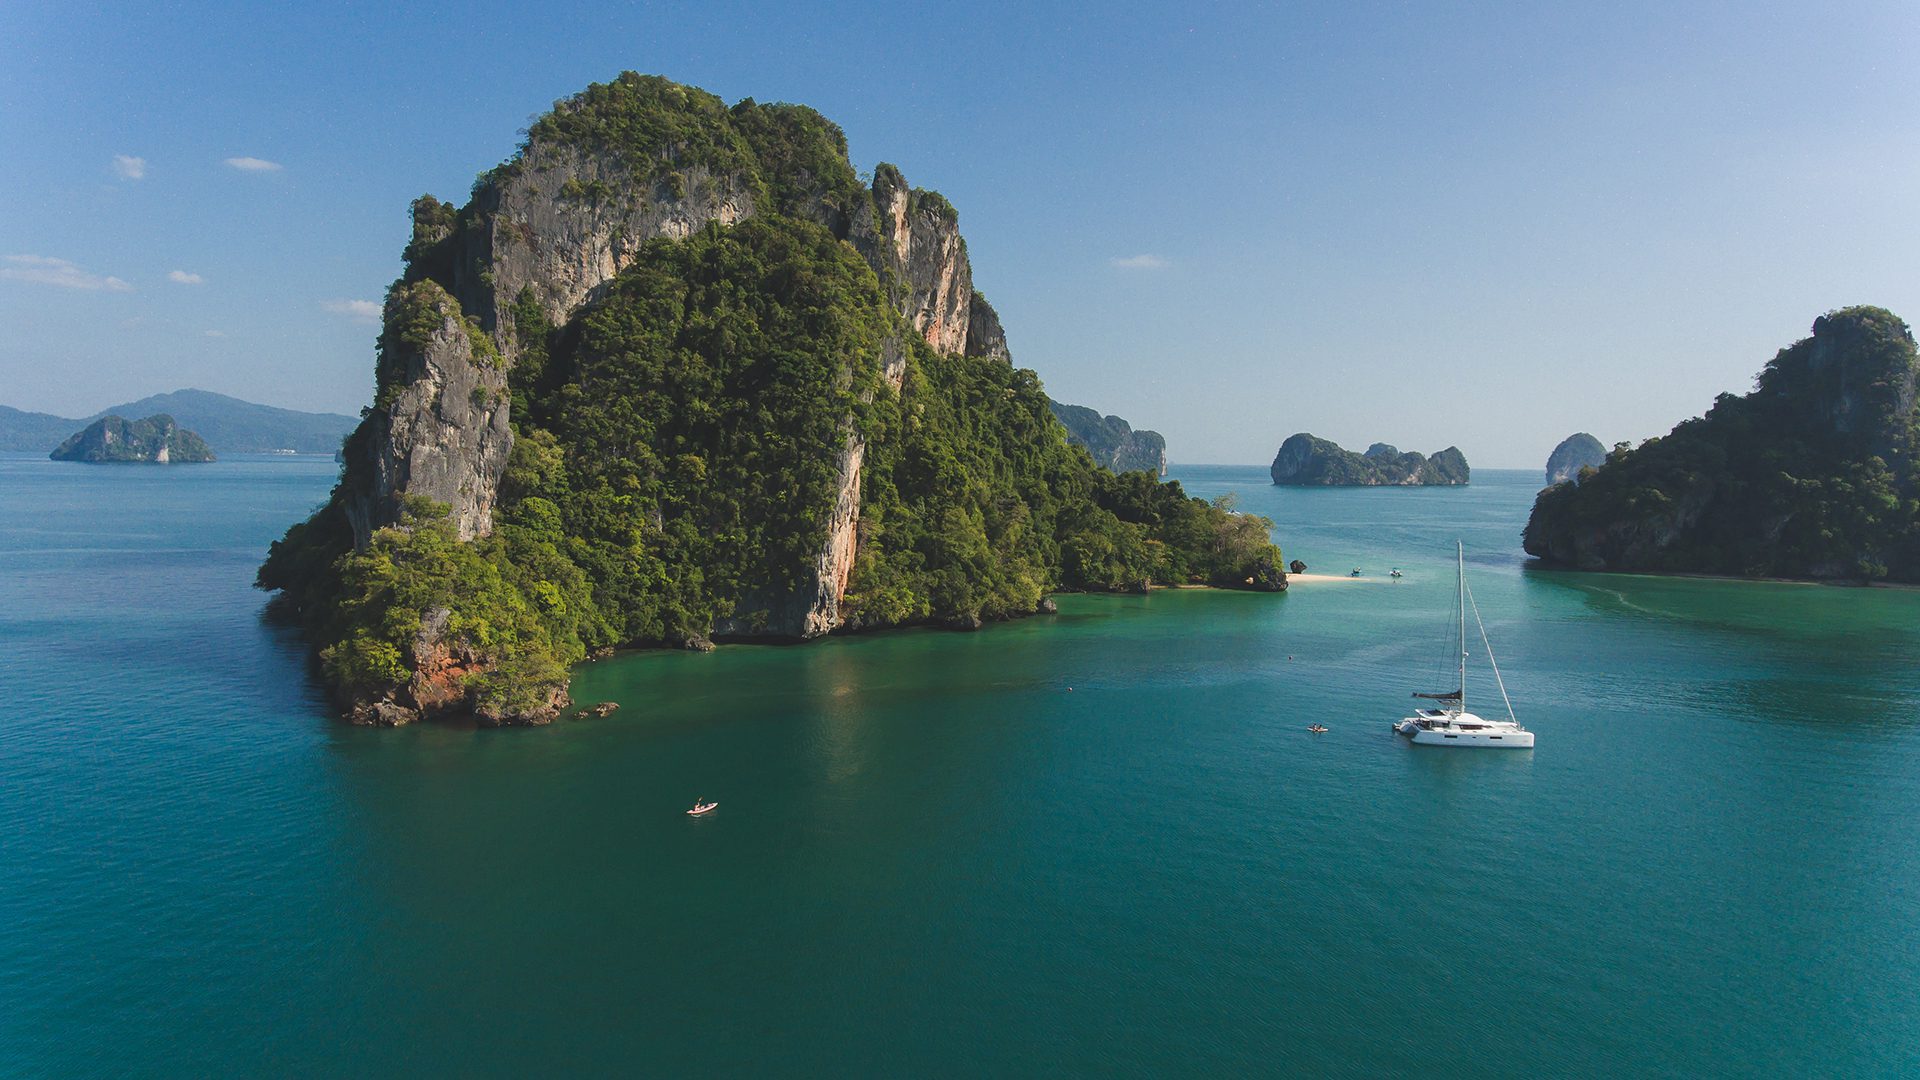 The-Blue-Moon-catamaran-anchored-in-the-jade-green-waters-of-Phuket-Photo-Wan-Tse-Simpson-Yacht-Charter